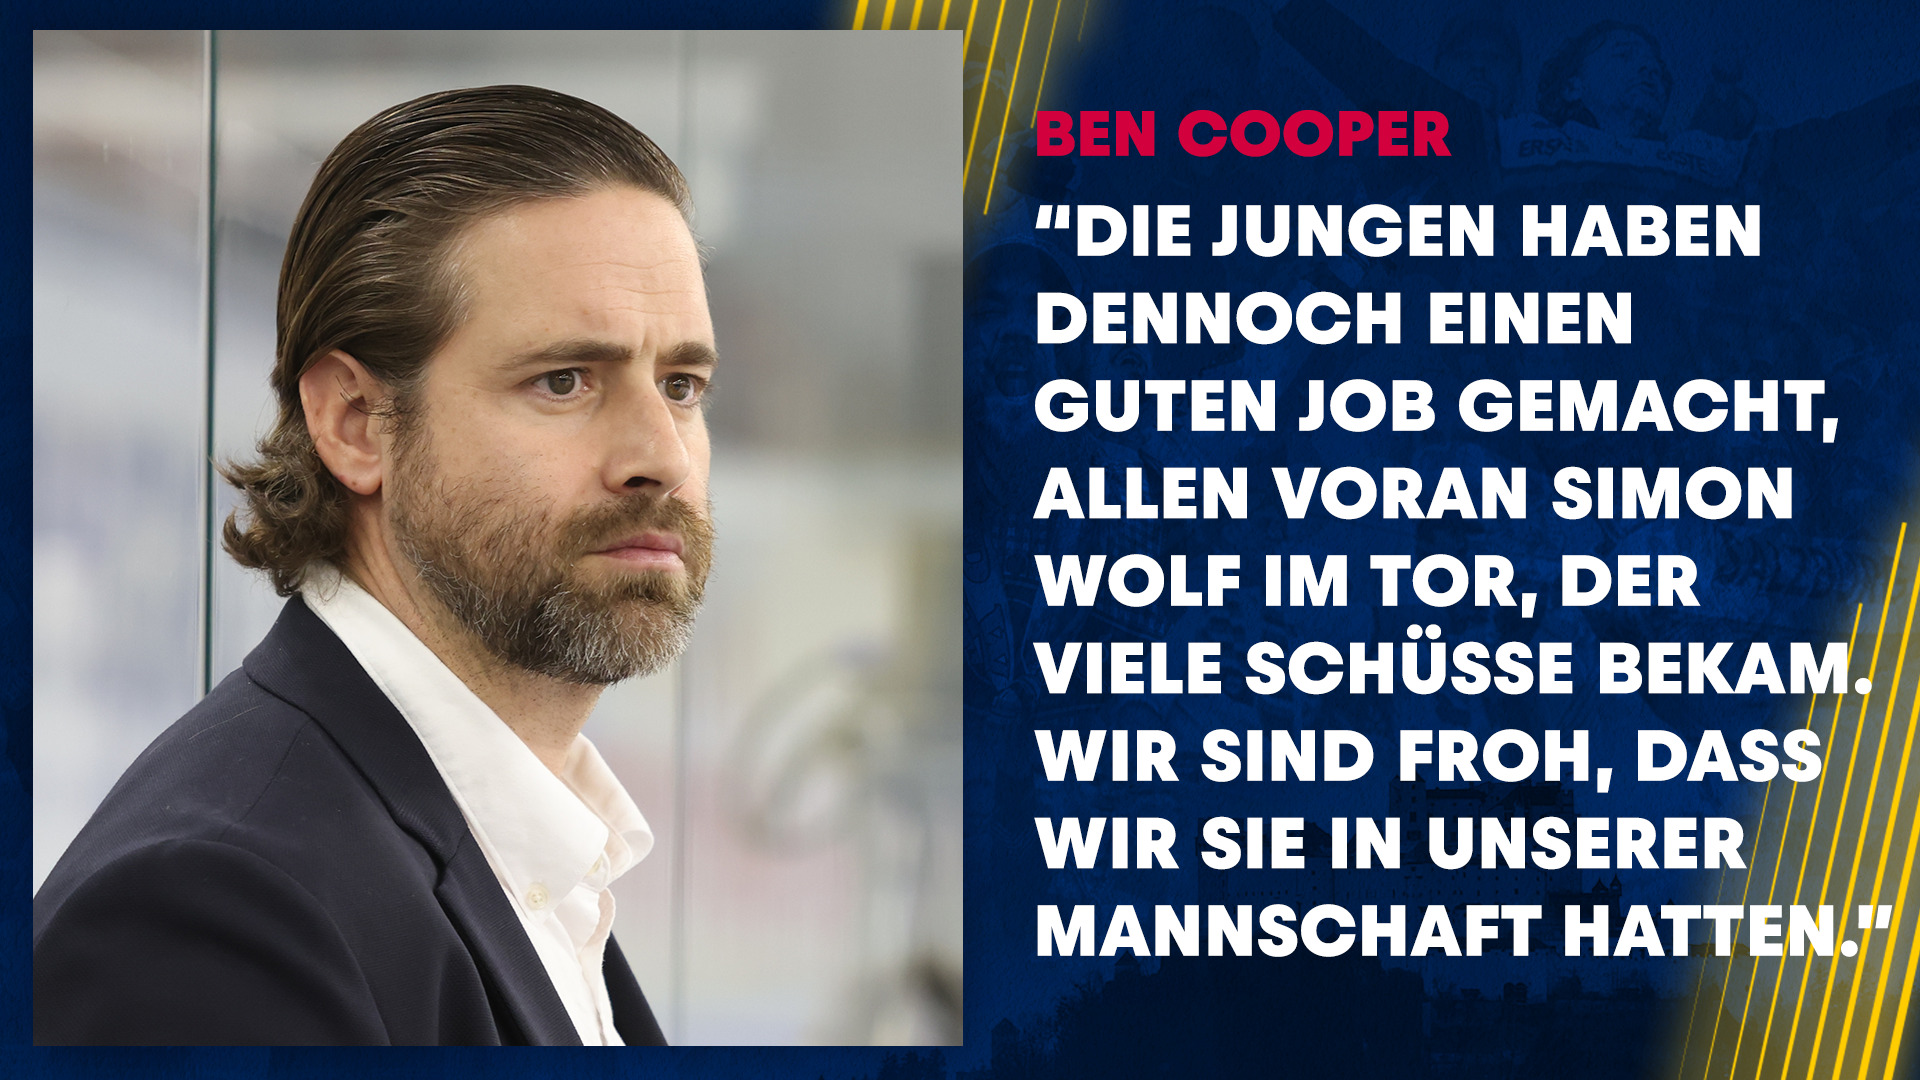 Statement: Ben Cooper